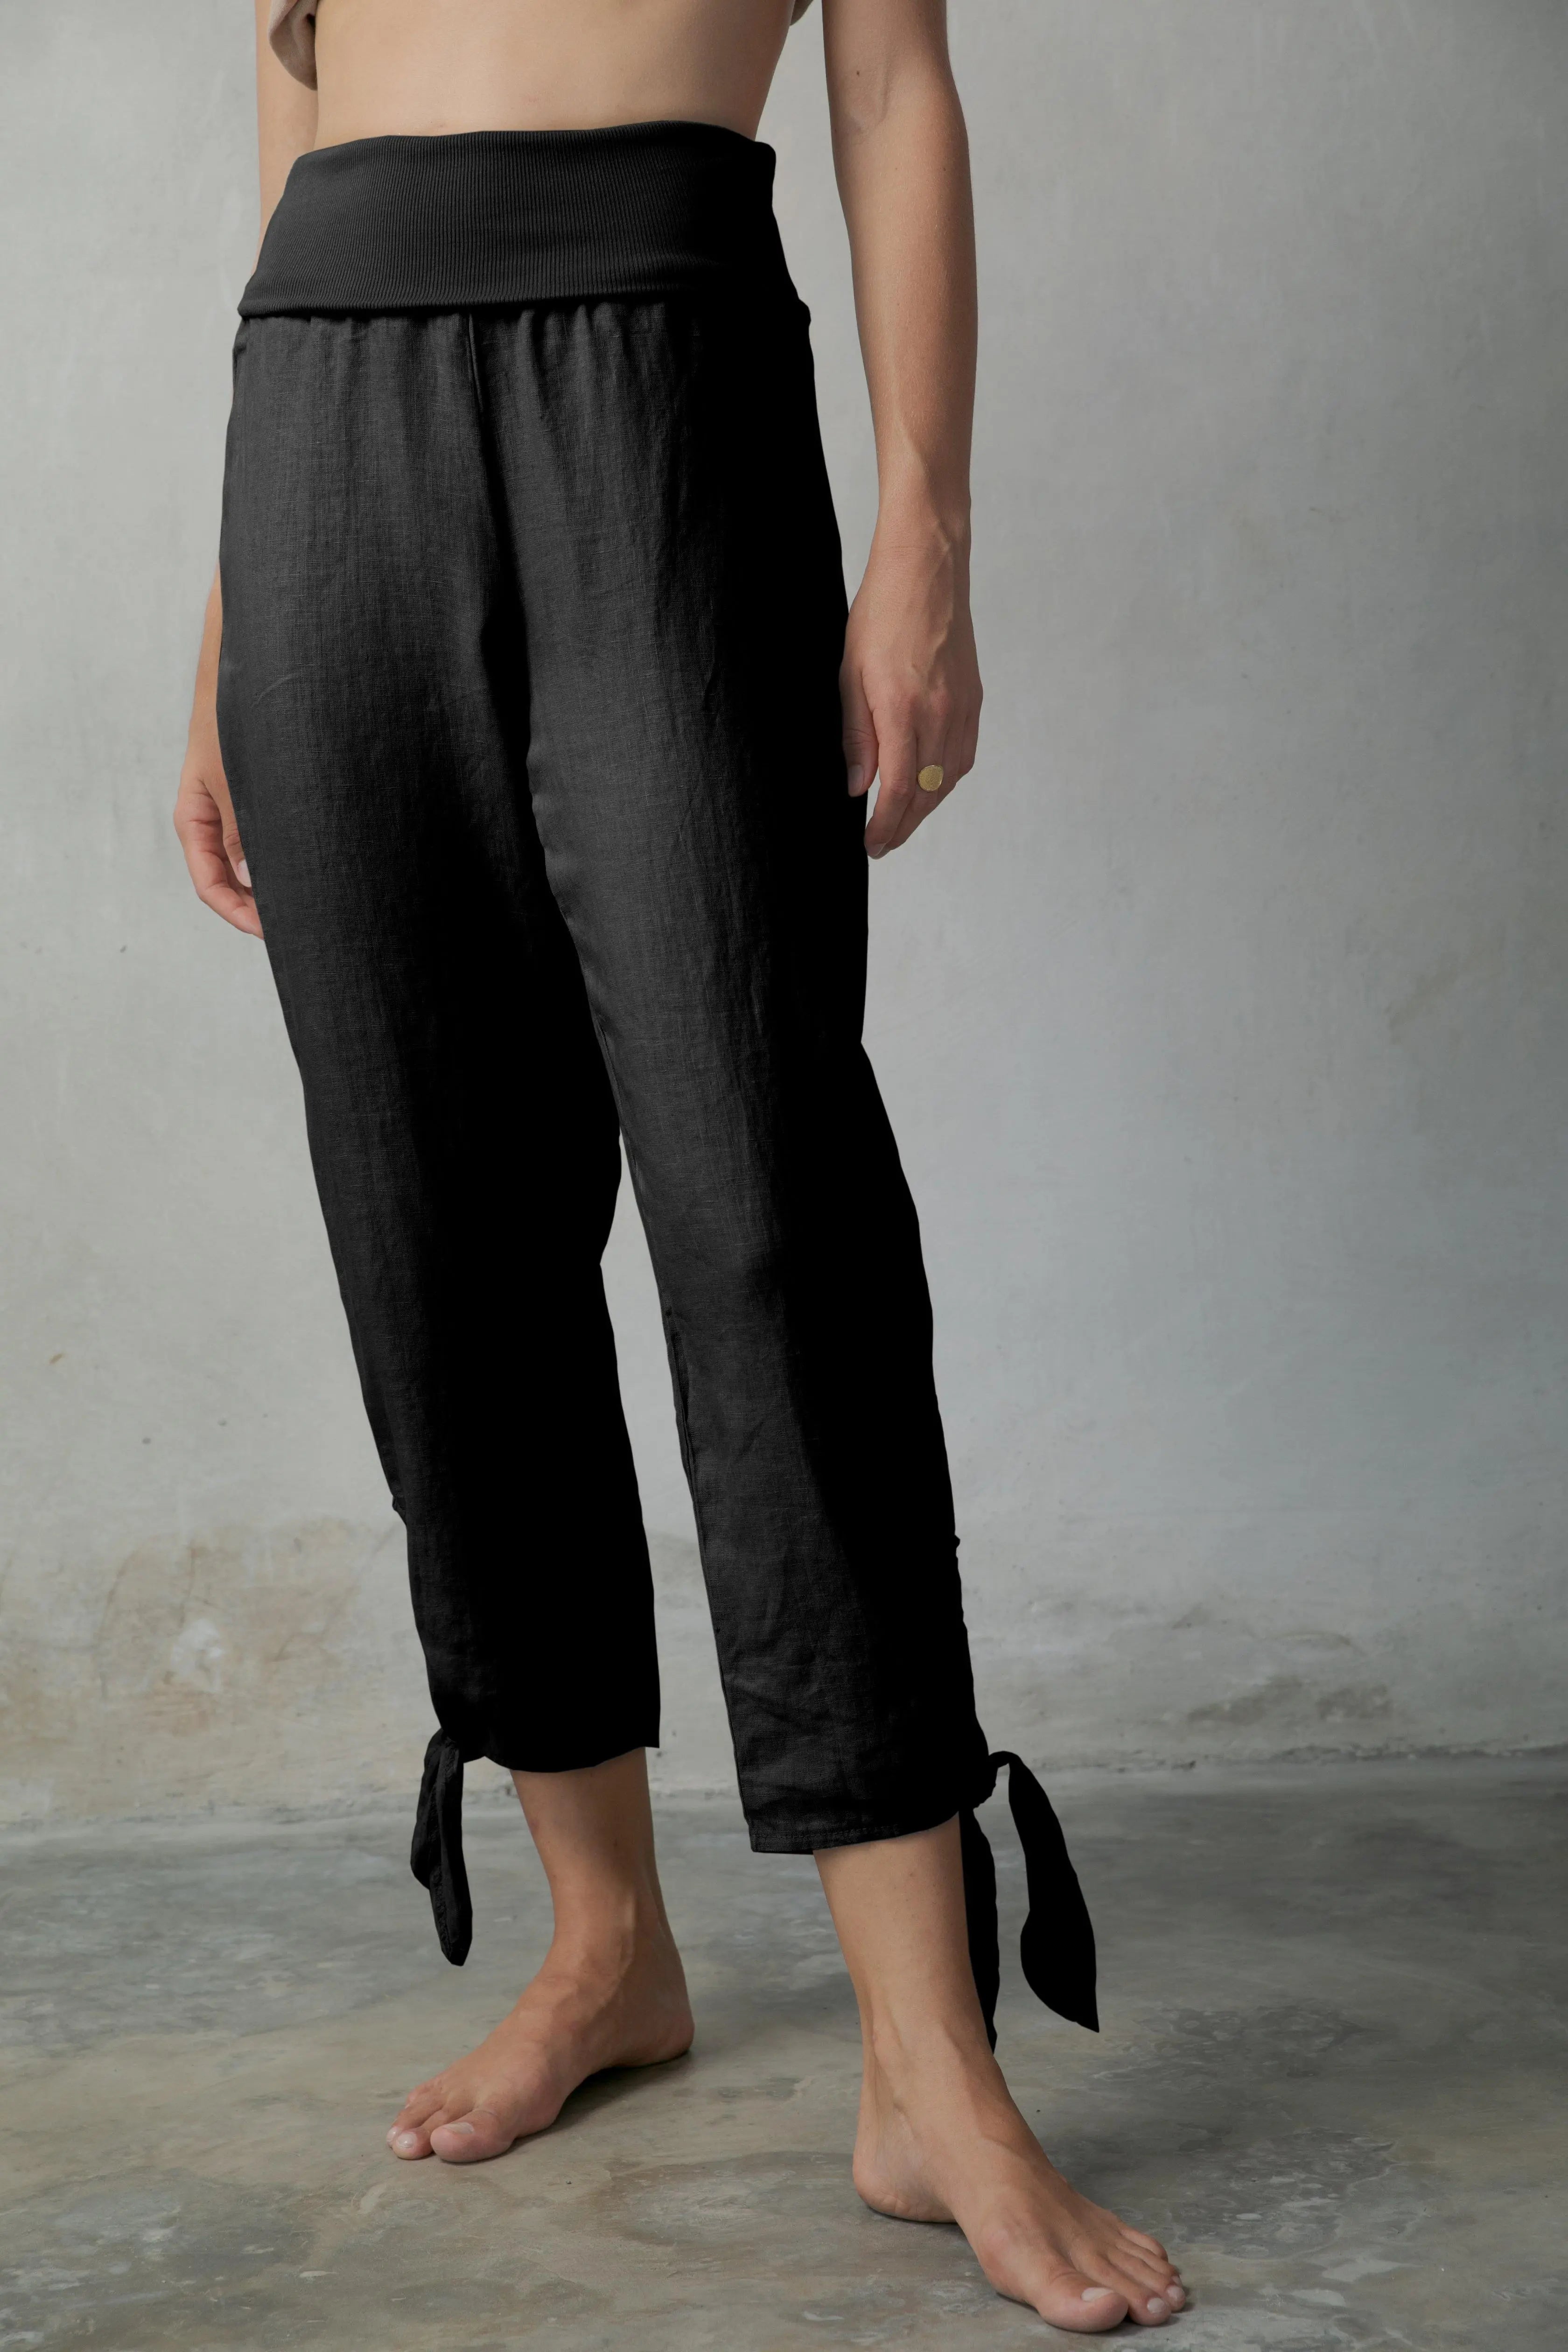 Buy Black Cotton Solid Capri Pant (Capri) for INR399.50